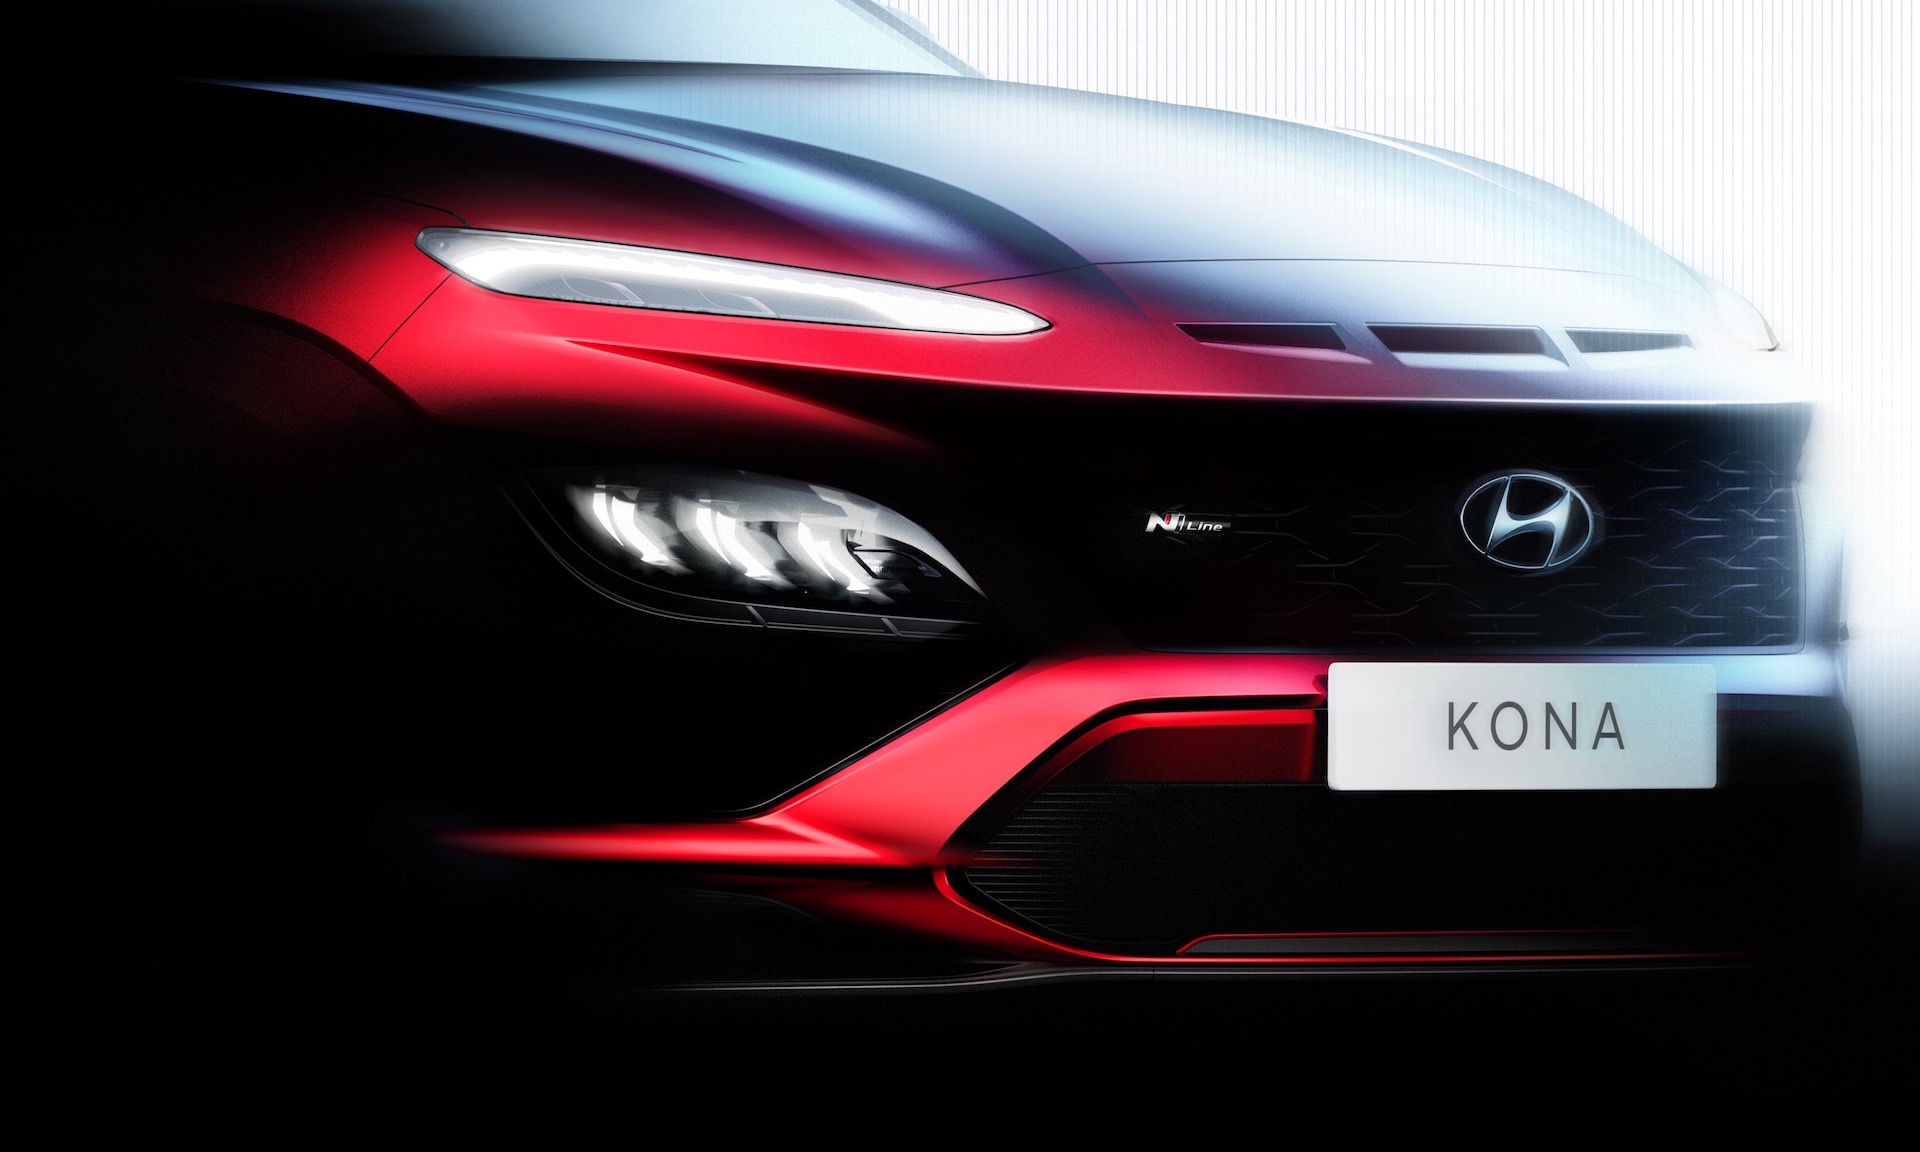 2021 Hyundai Kona previewed, sporty N Line variant confirmed